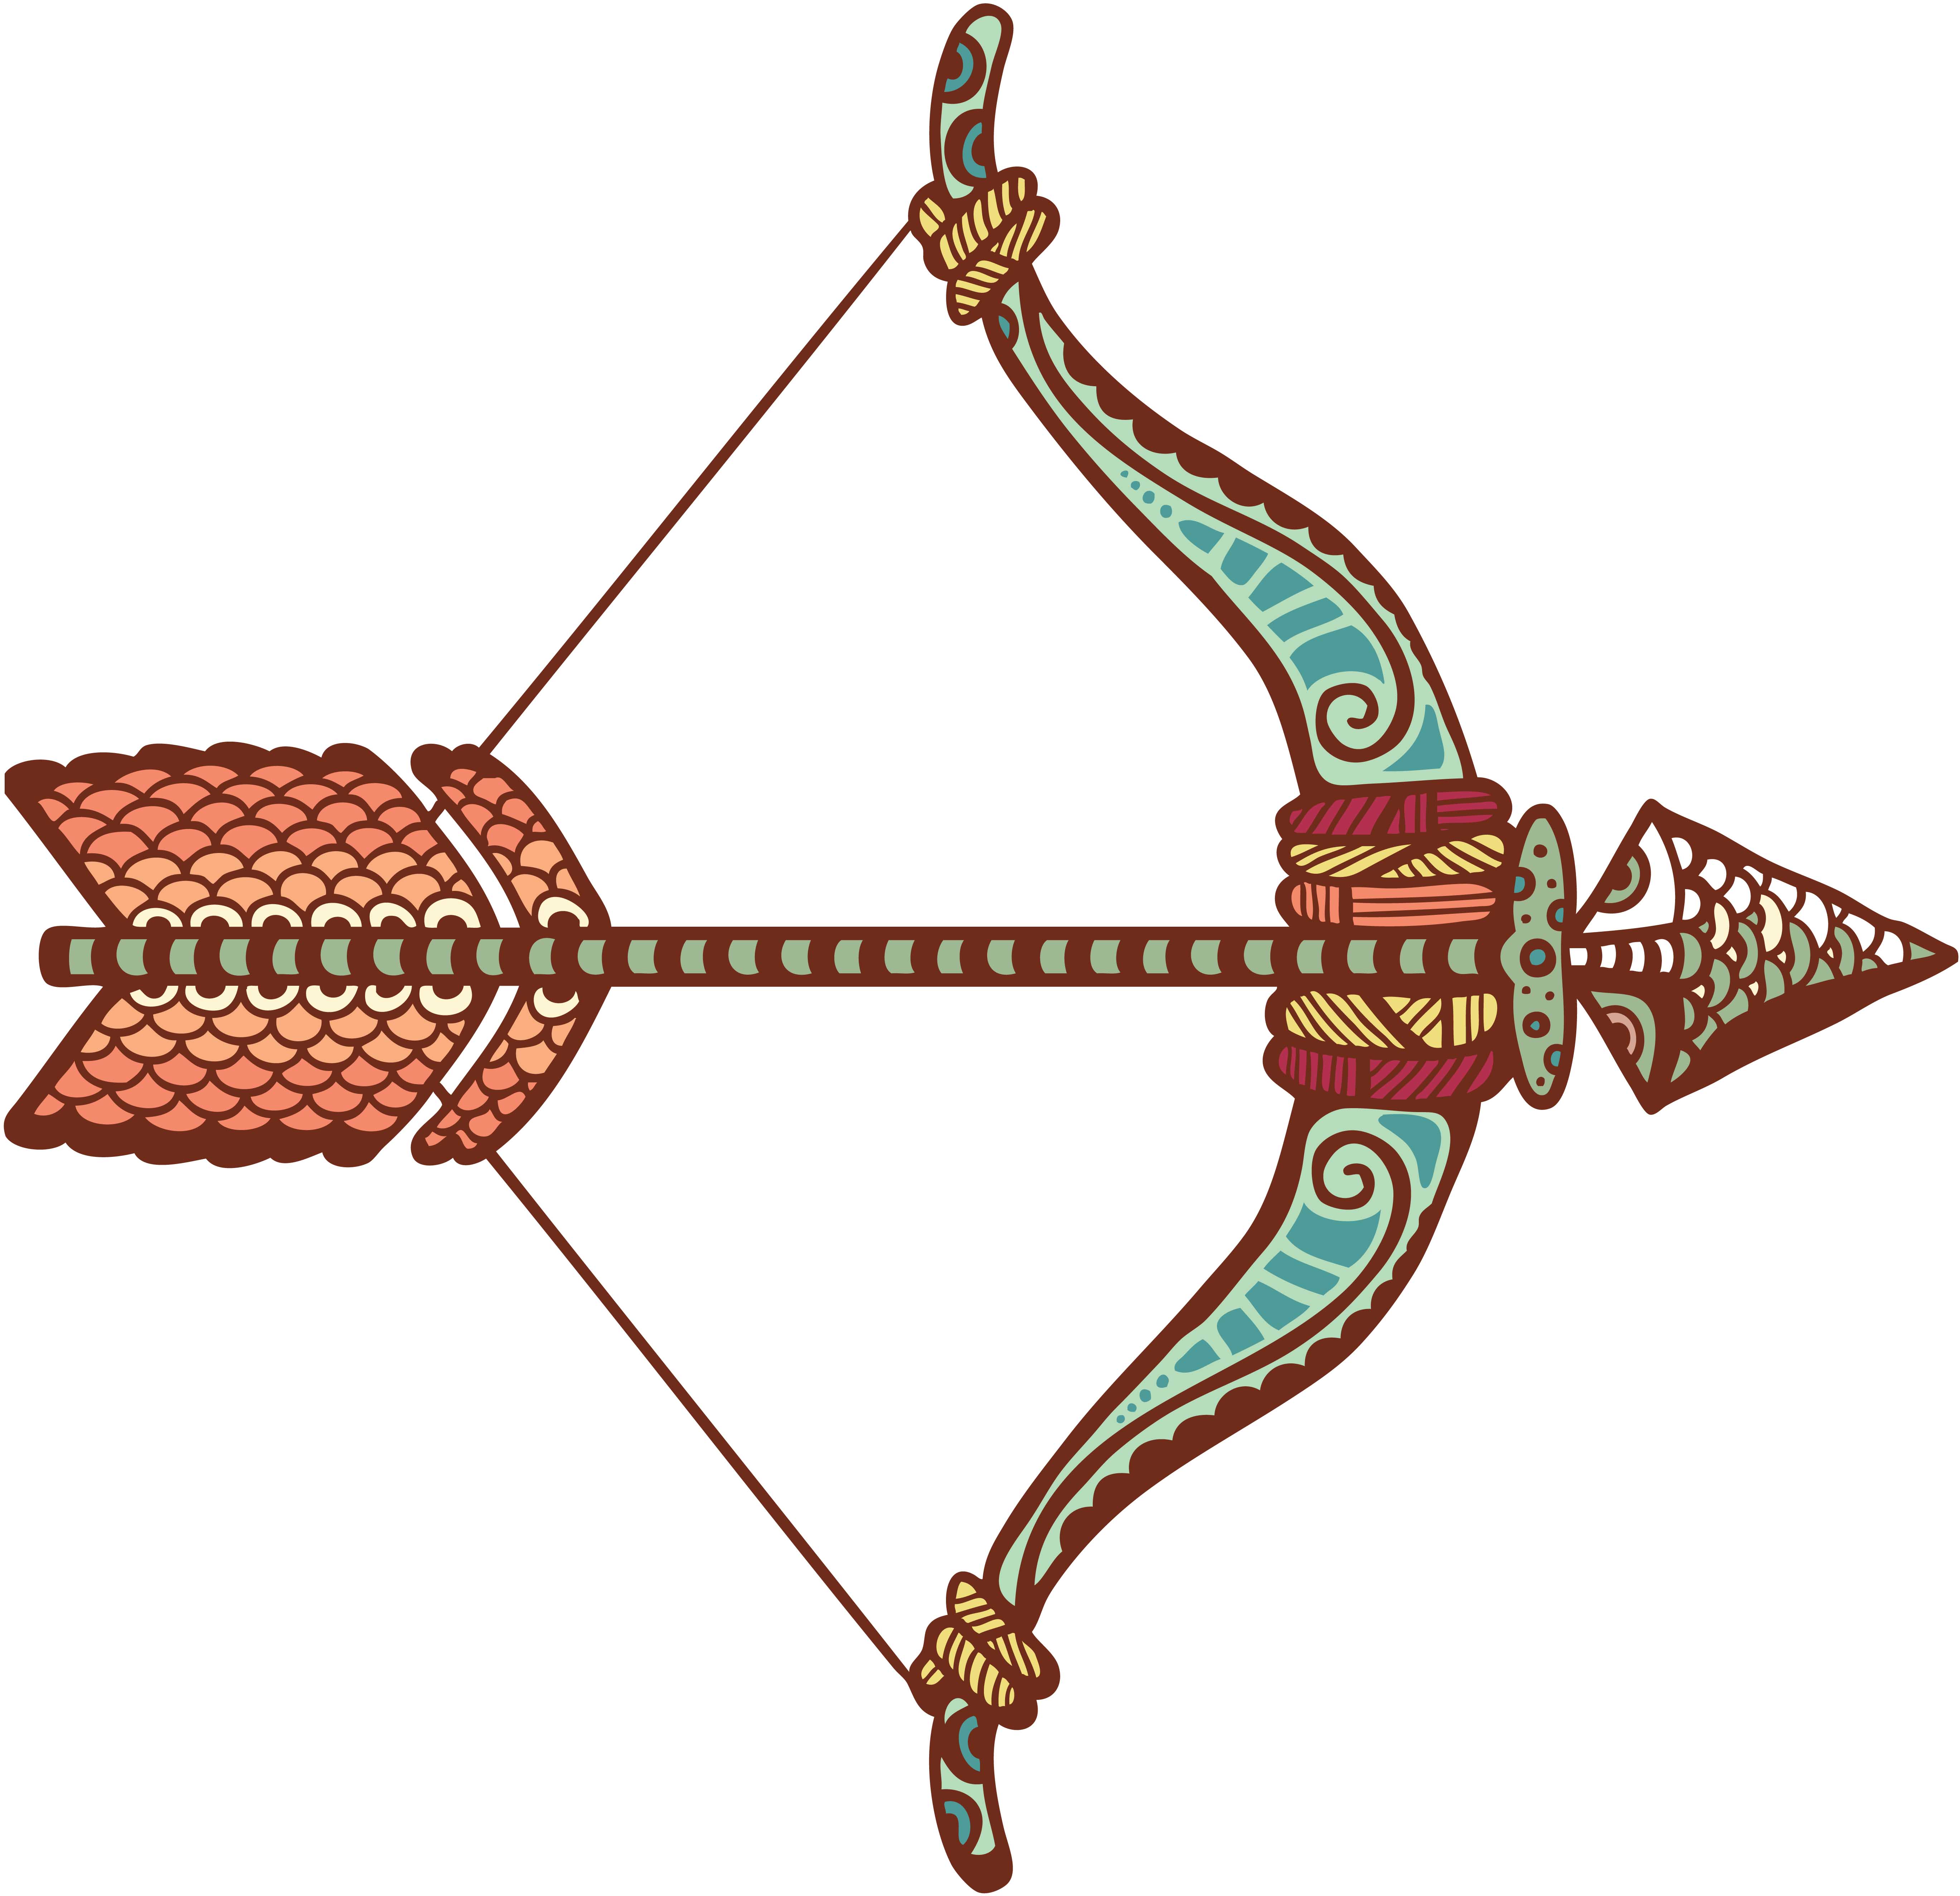 Лук и стрелы символ